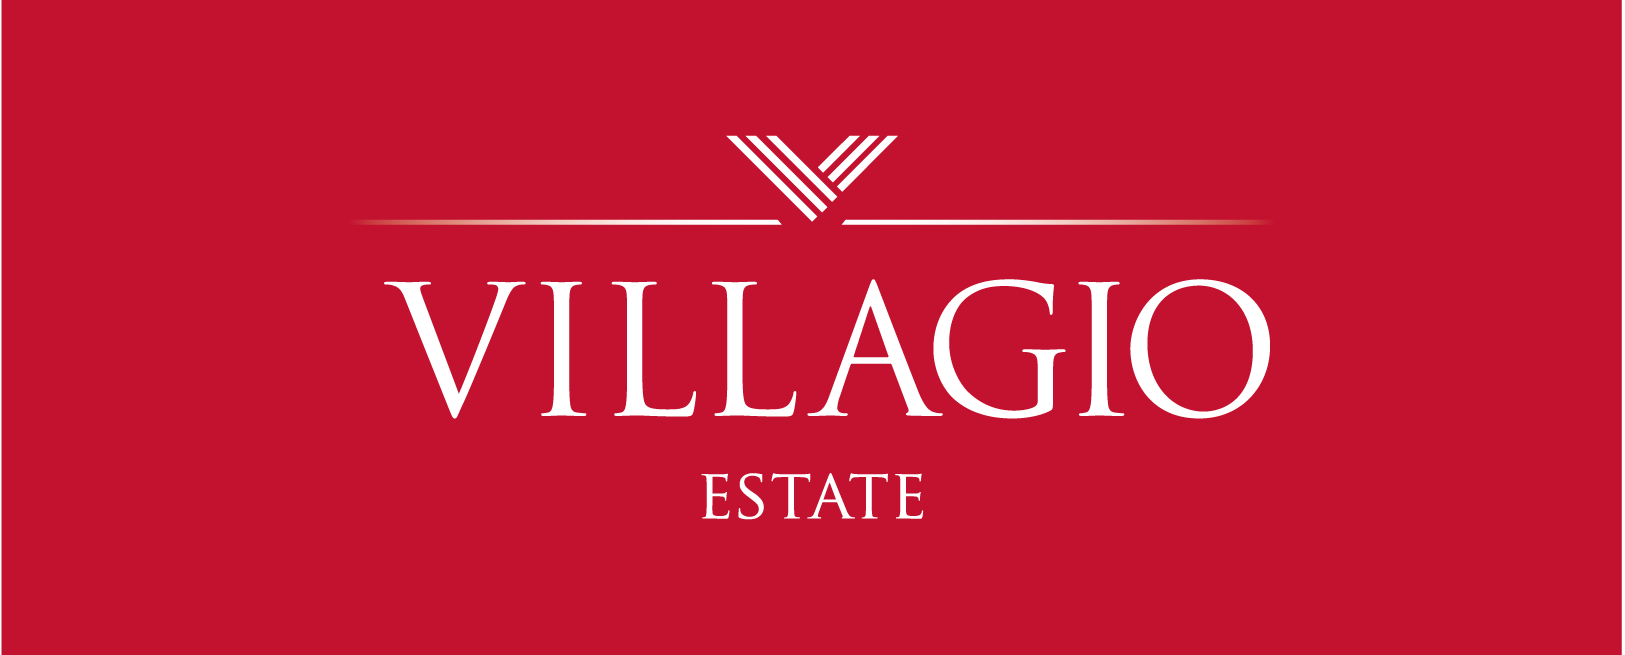 Villagio Estate. Villagio Estate логотип. Villagio Estate офис продаж. Вилладжио Эстейт коттеджный. Realty москва